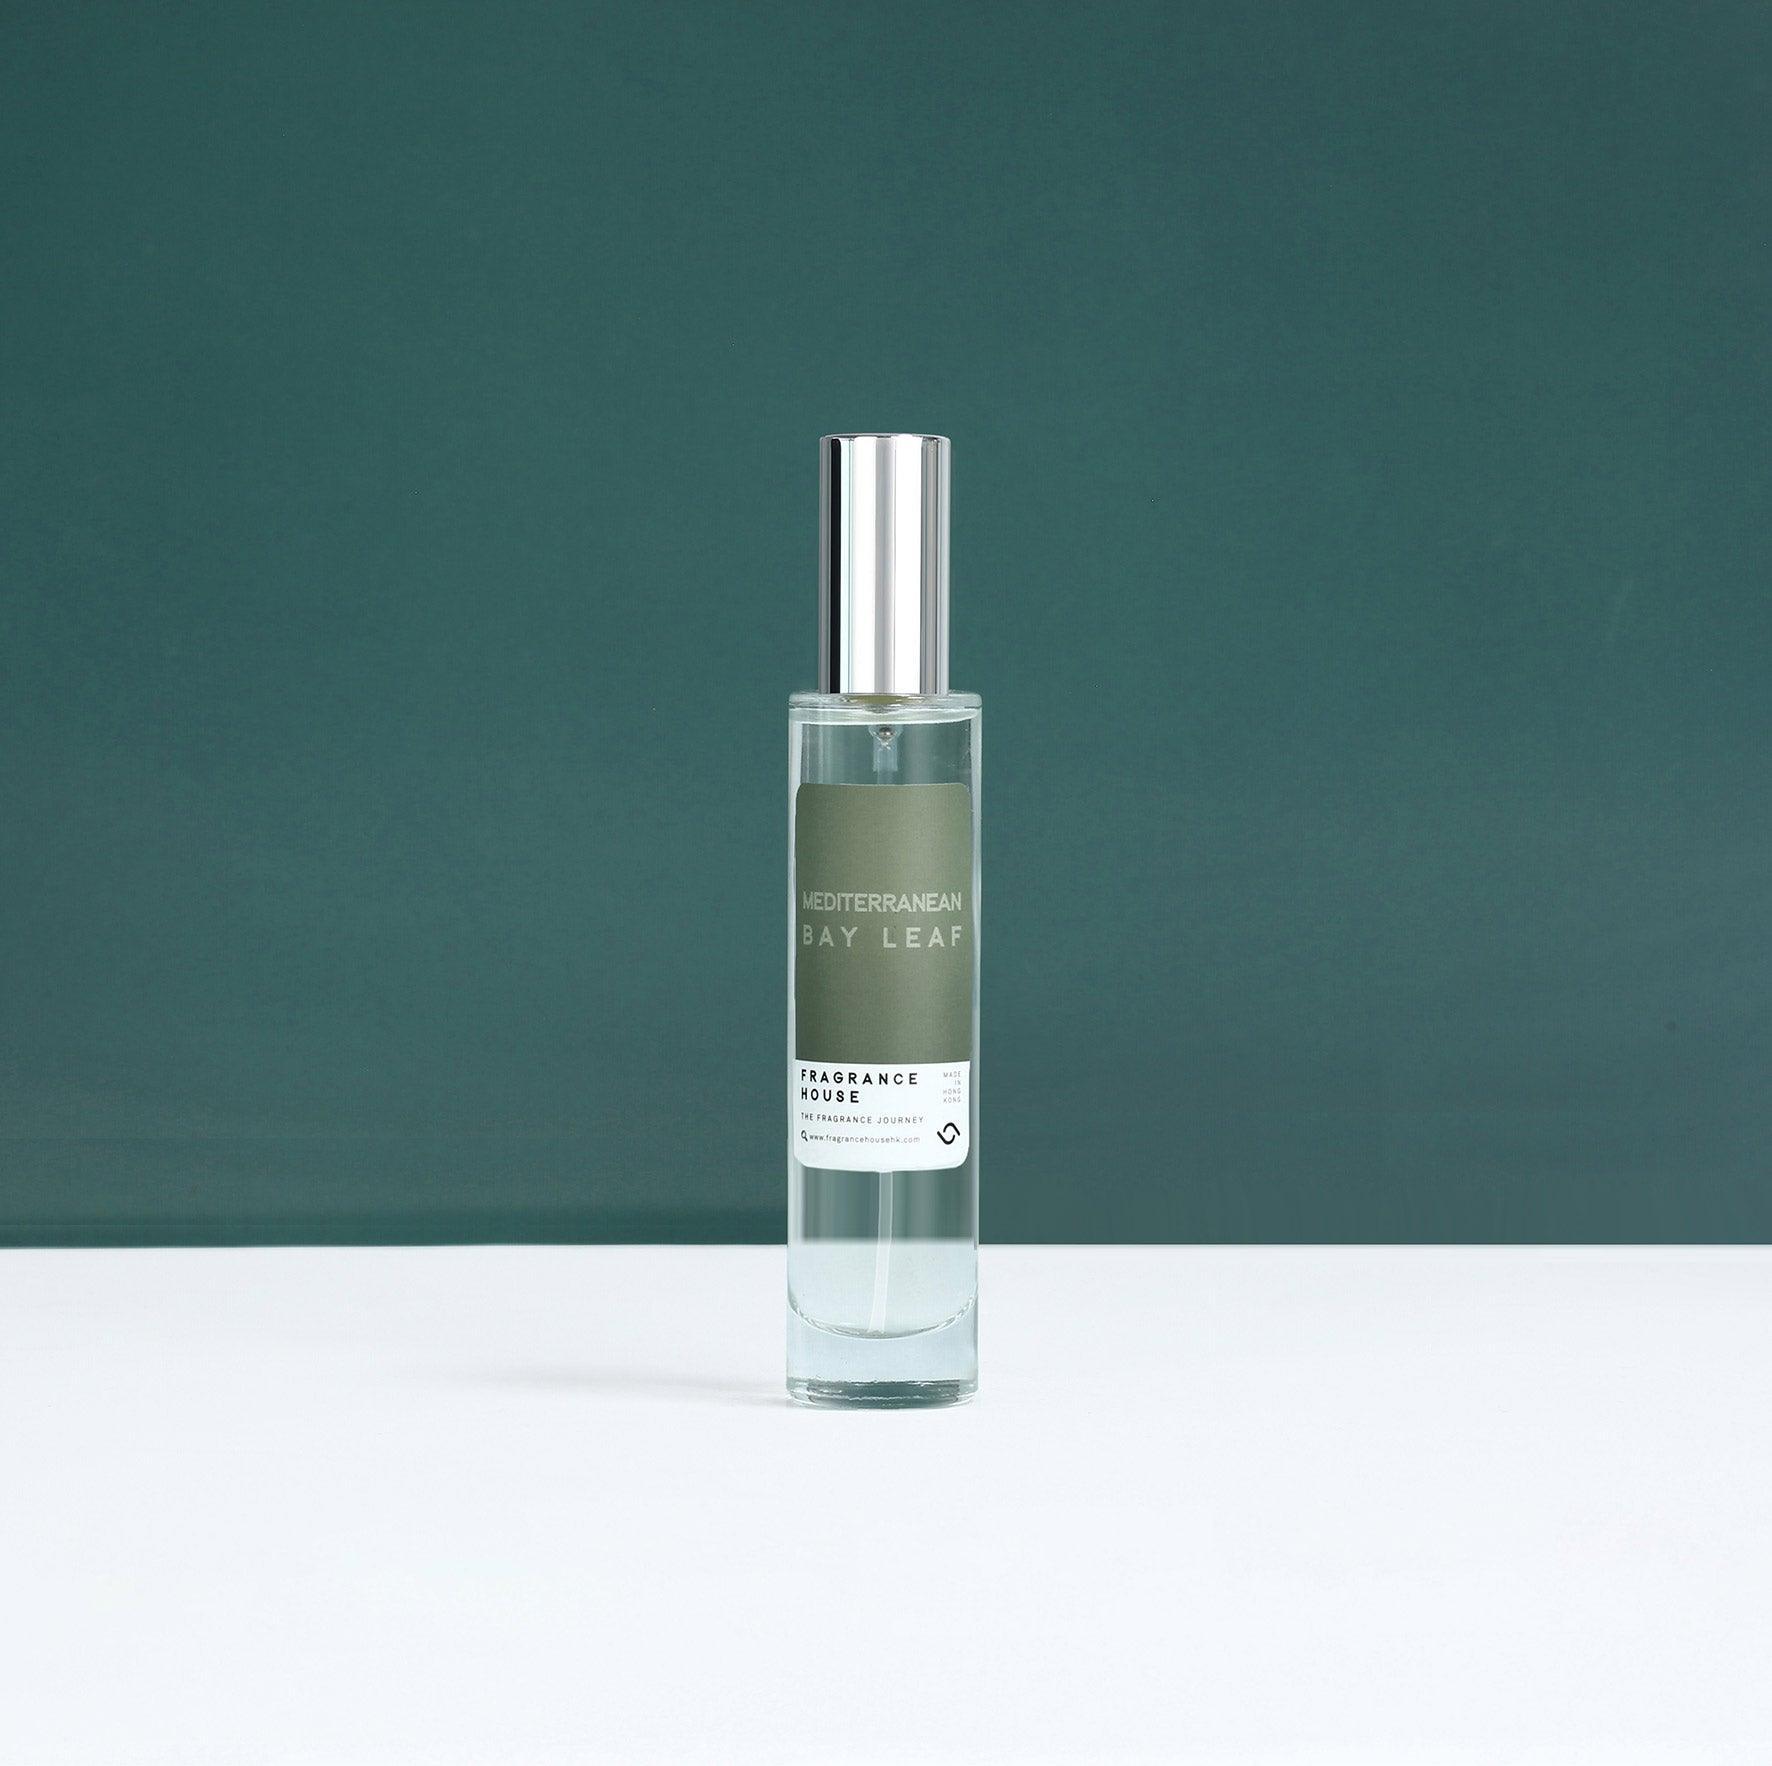 Eau de Parfum 30ml | Mediterranean Bay Leaf - Fragrance House HK